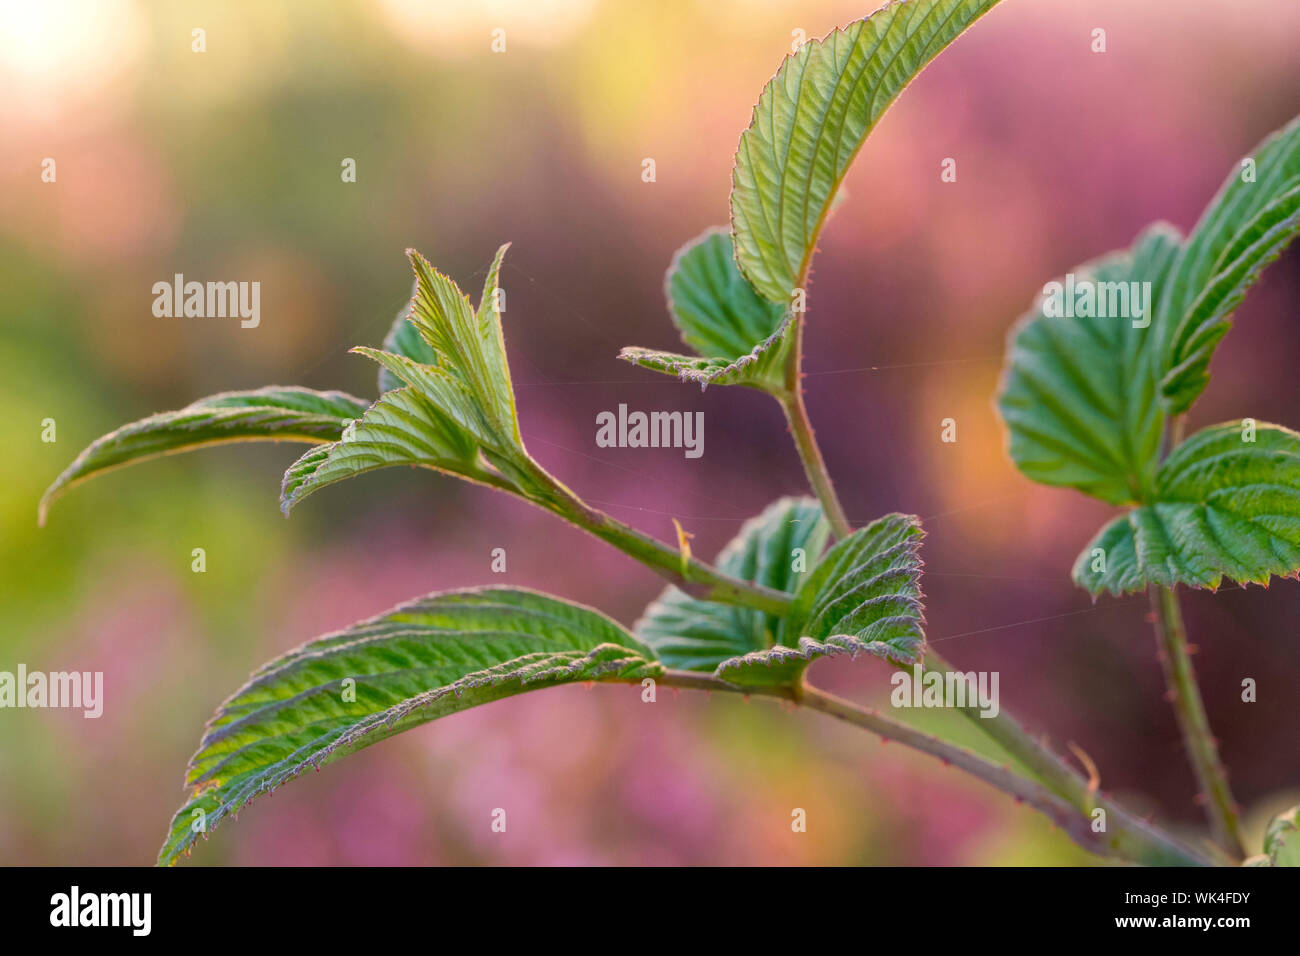 Himbeere, Rubus idaeus, Gerbstoffe, Gallotannine, Ellagitannine, Flavonoide, Vitamin C, VitaminC Stock Photo